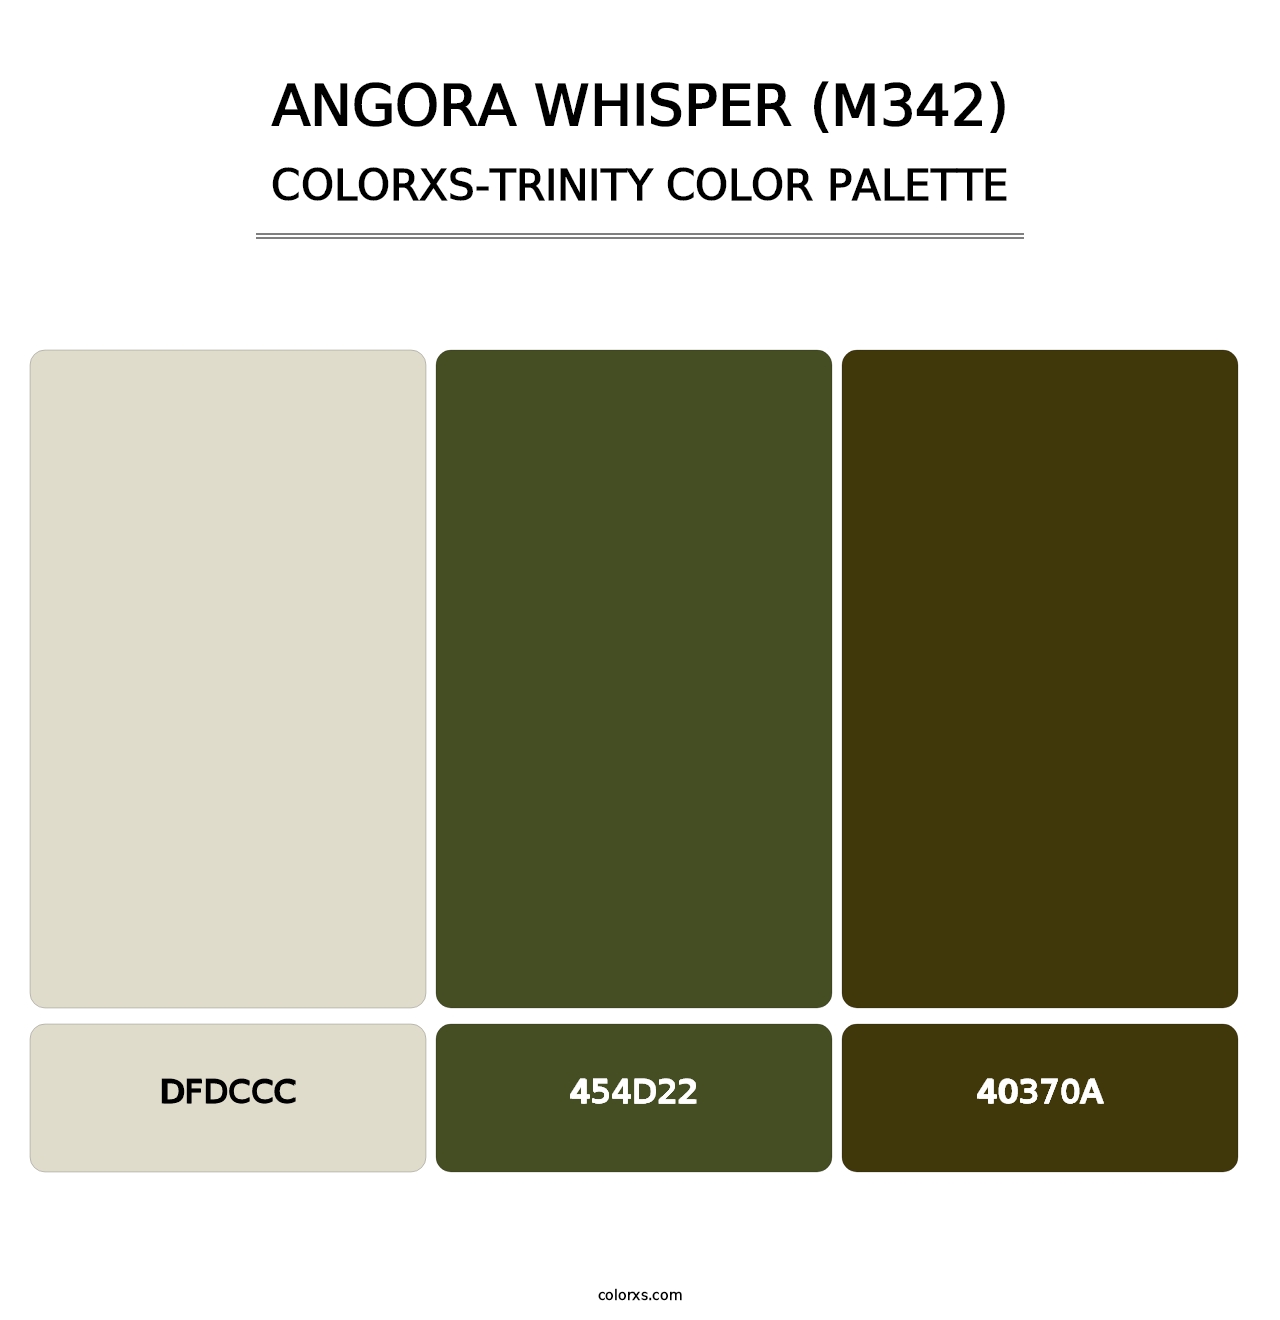 Angora Whisper (M342) - Colorxs Trinity Palette